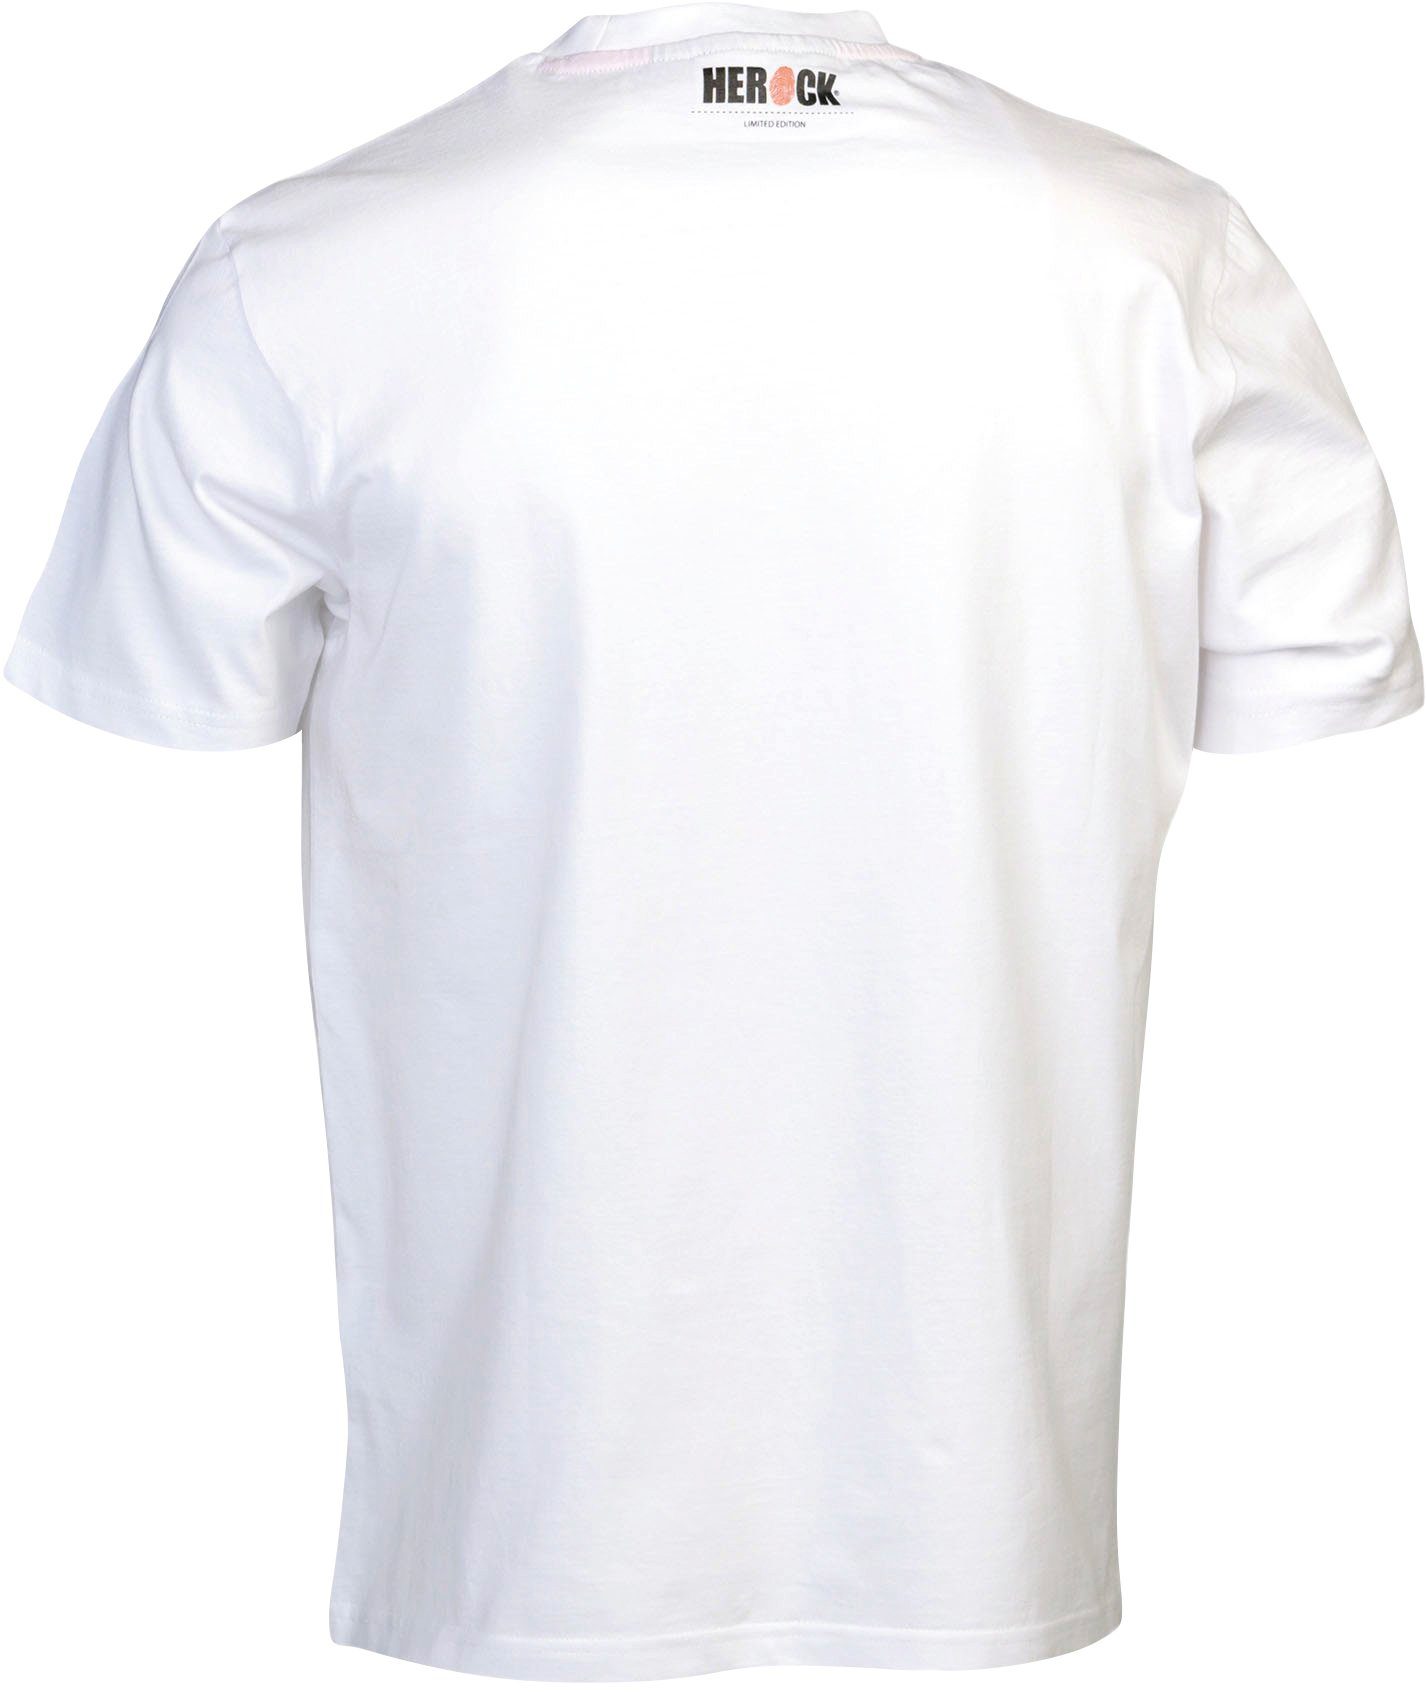 Herock T-Shirt Burst Mit Herock®-Aufdruck Ärmeln, Rundhalsausschnitt, kurzen